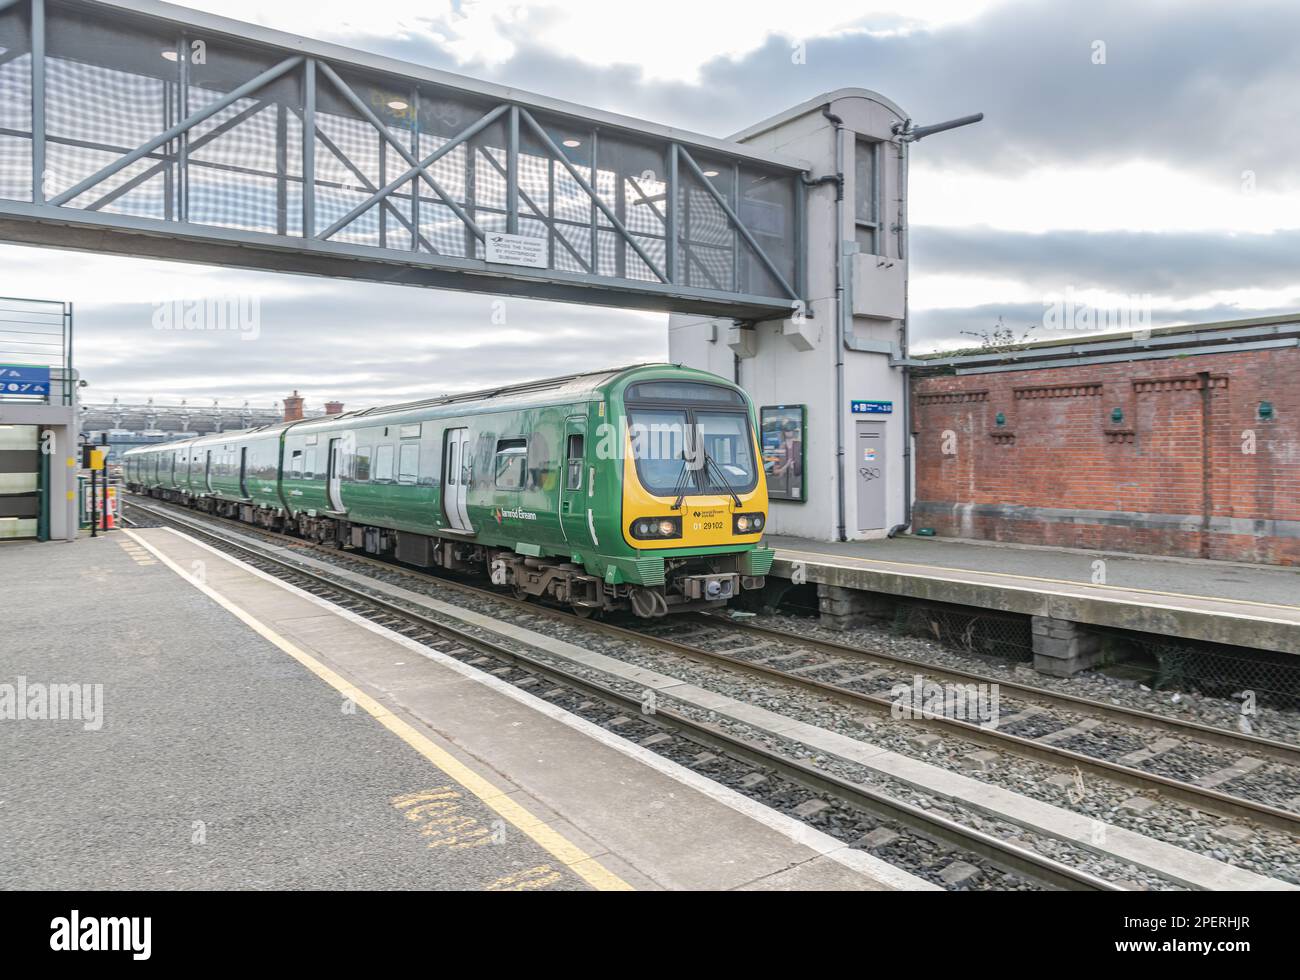 Ankunft des Zuges am Bahnhof Drumcondra - Droim Chonrach, Dublin, Irland Stockfoto